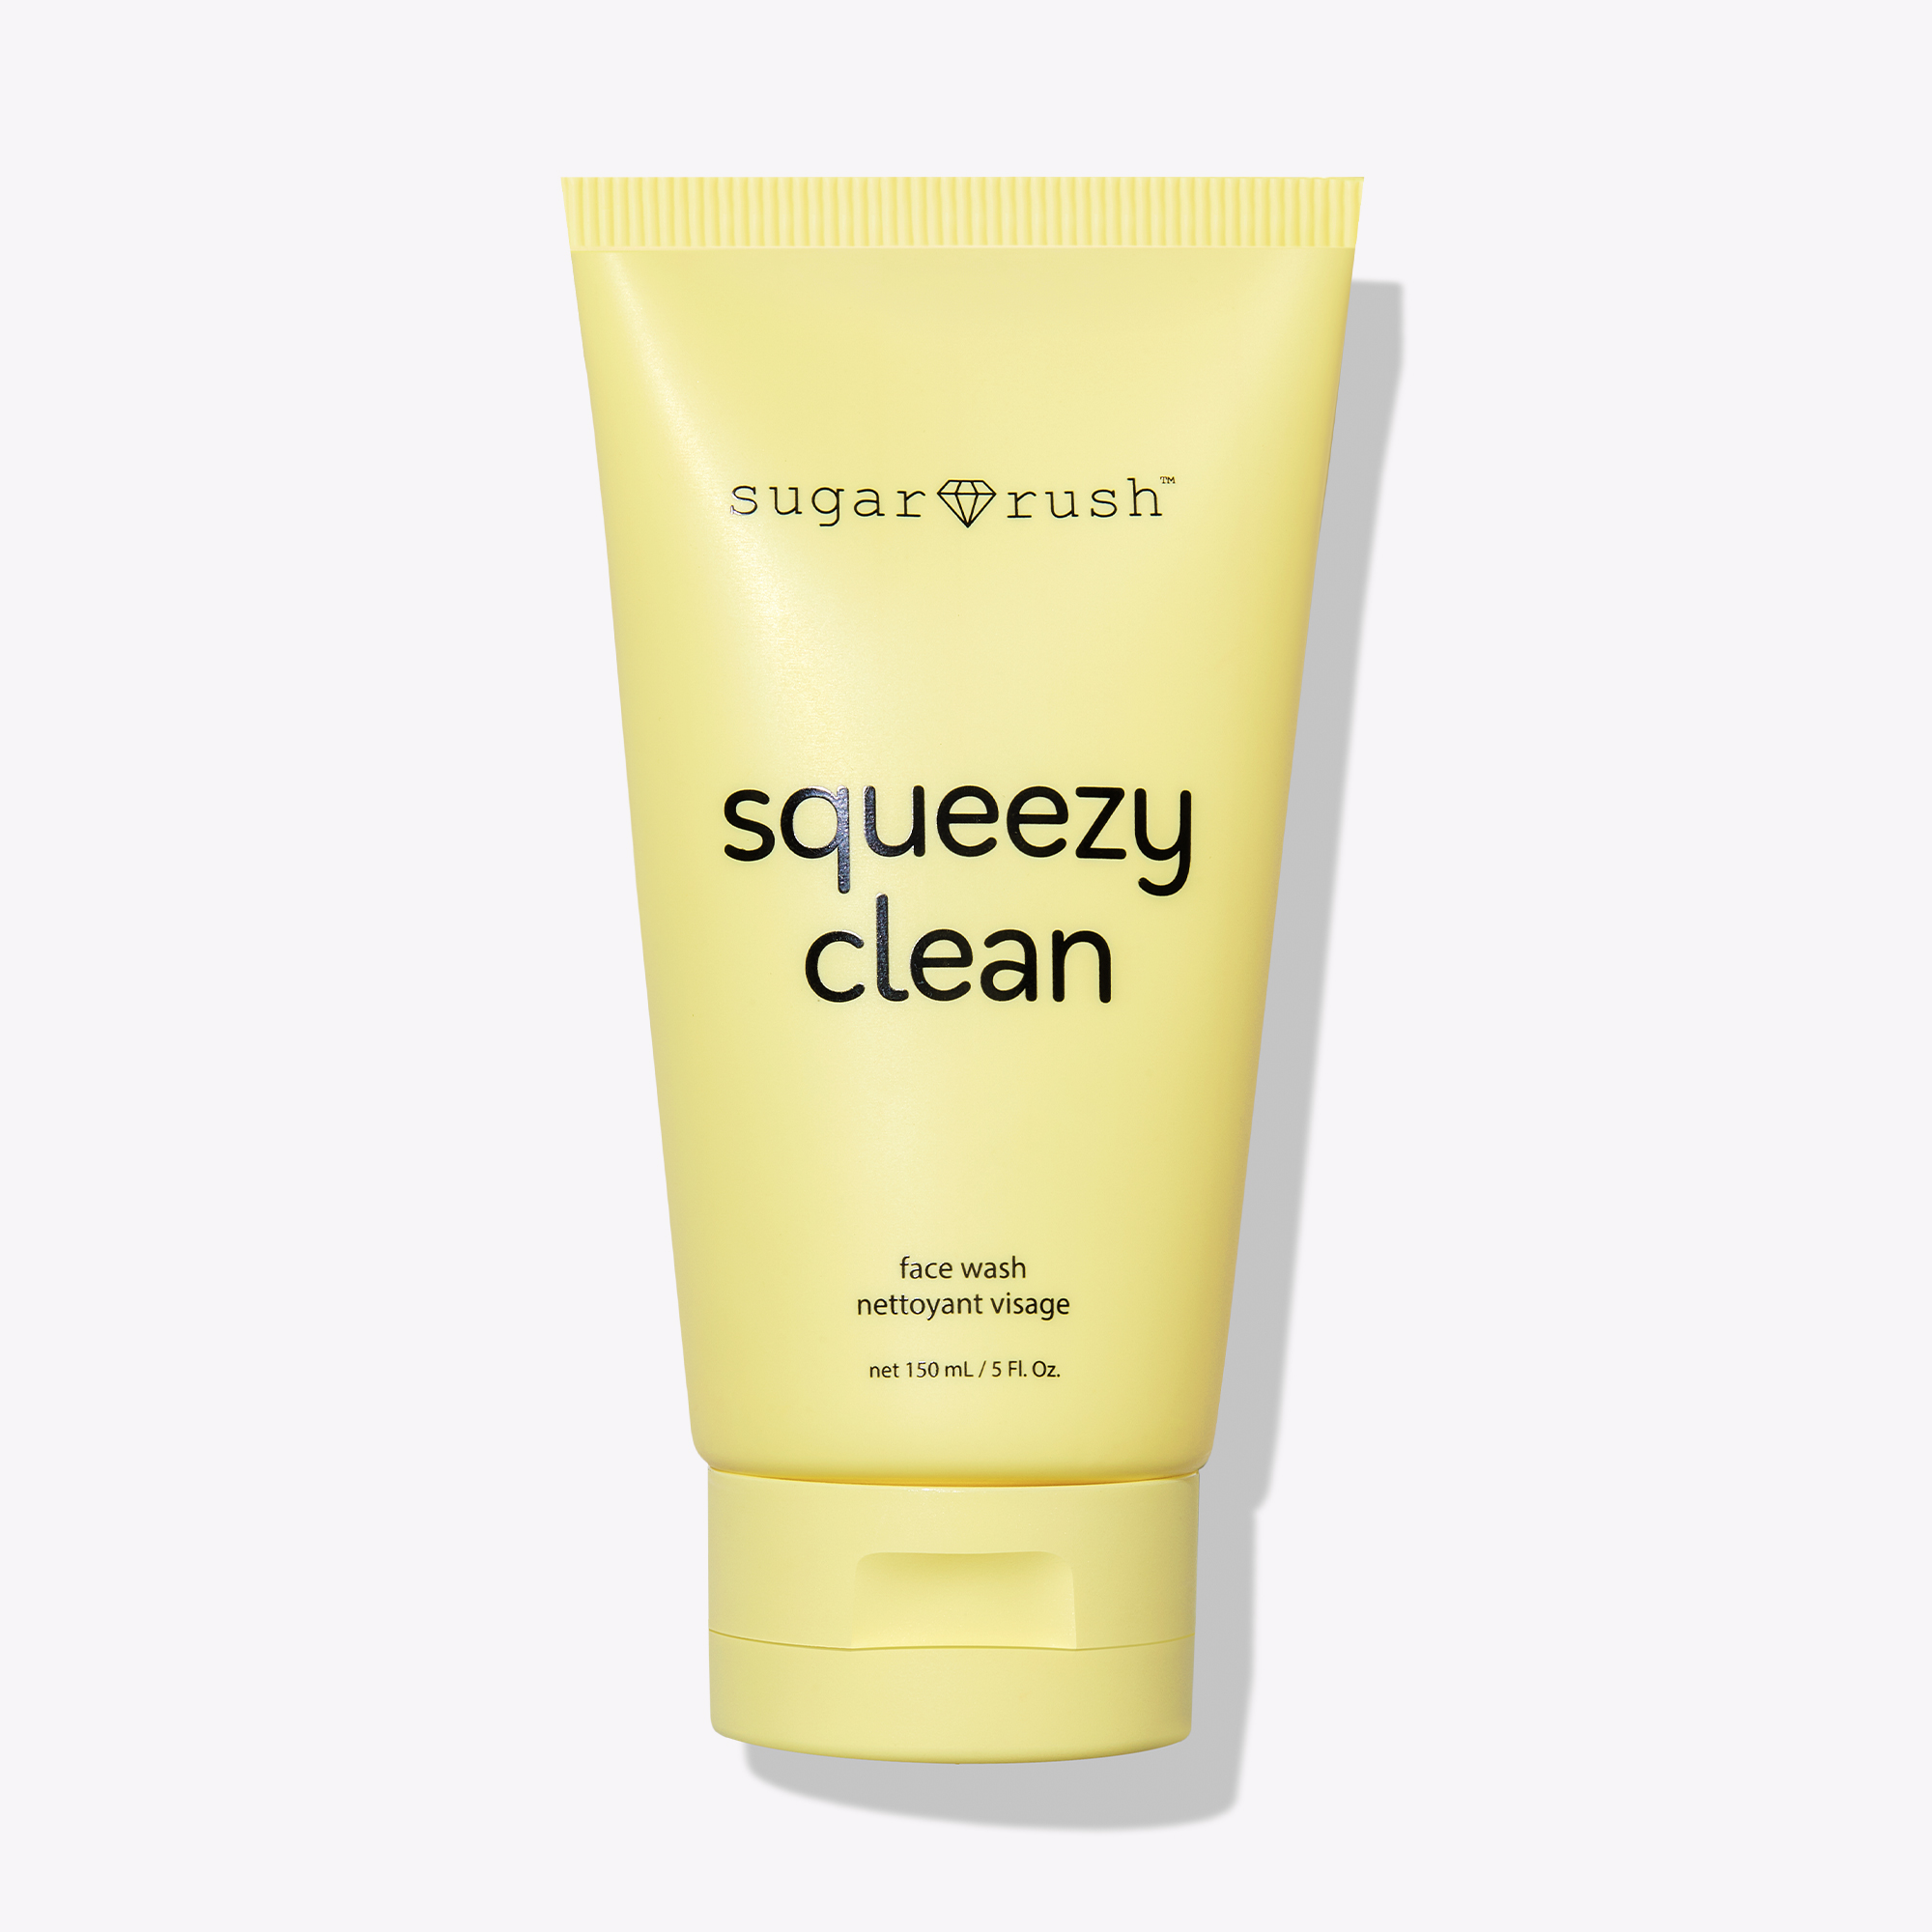 Tarte Cosmetics Sugar Rushâ?¢ Squeezy Clean Face Wash In White